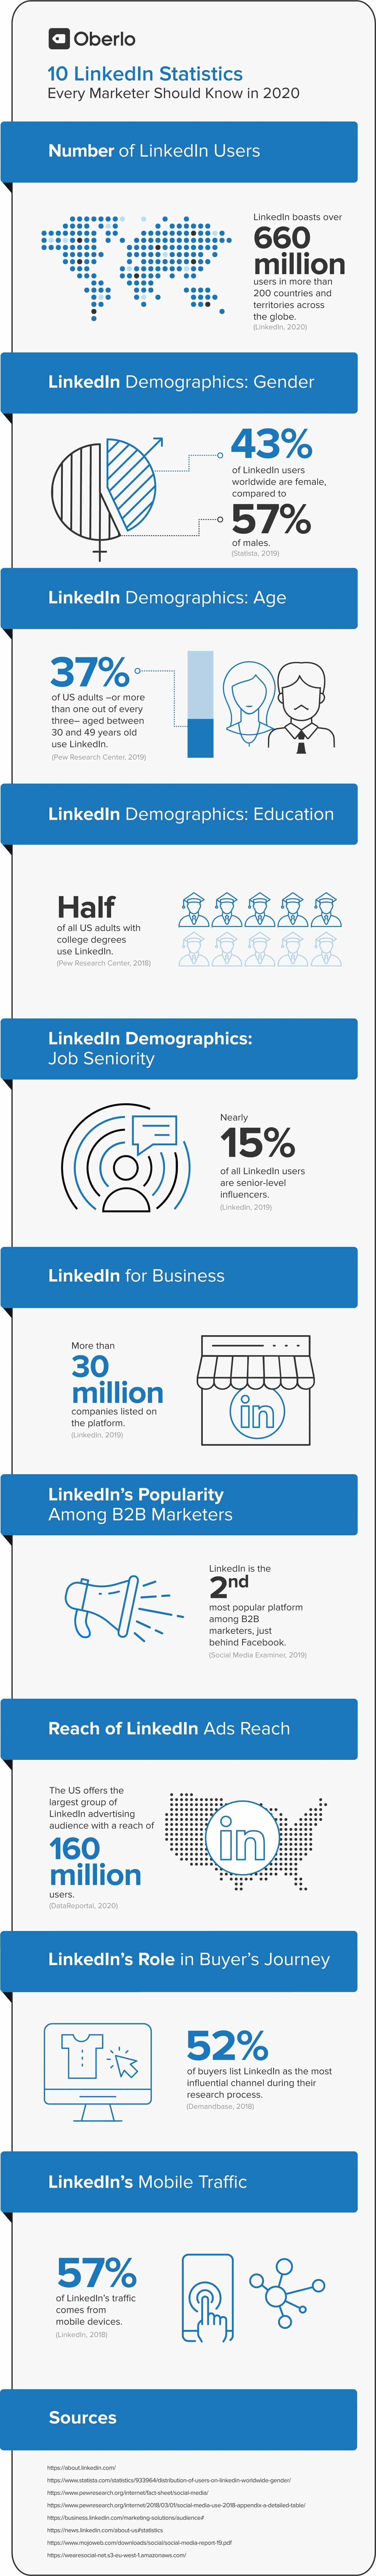 LinkedIn infographic